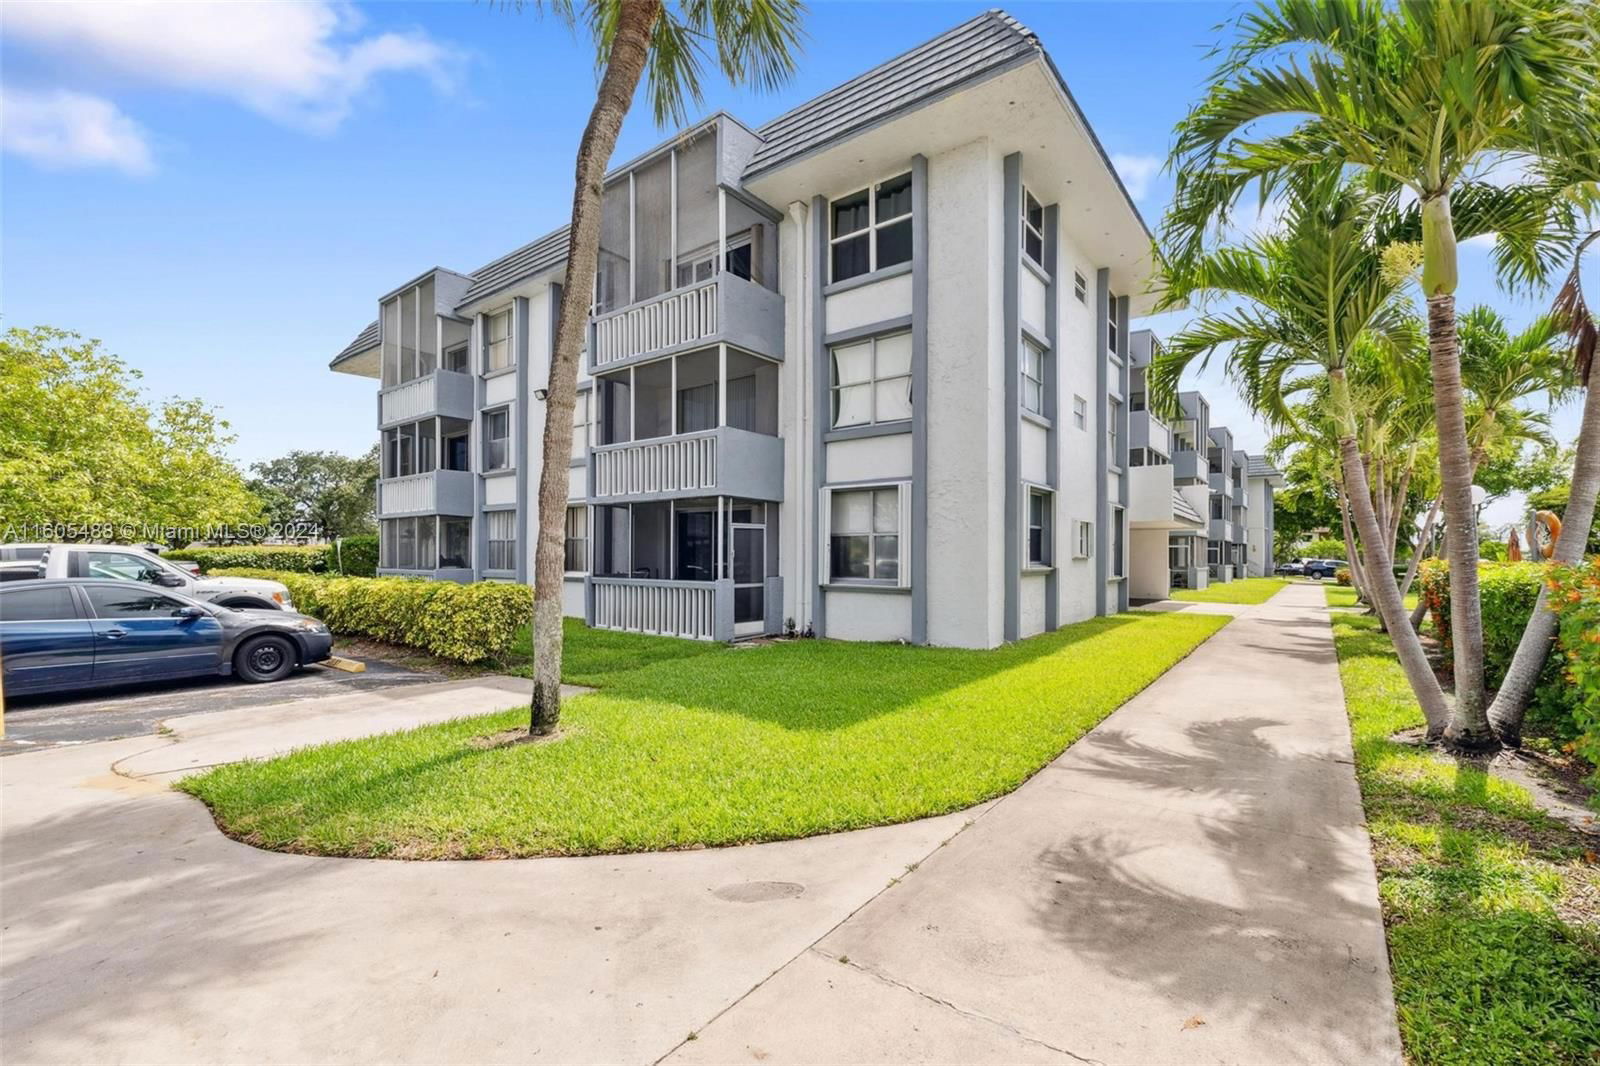 Real estate property located at 6705 169th St C310, Miami-Dade County, LUDLUM LAKE CONDO BLDG C, Hialeah, FL